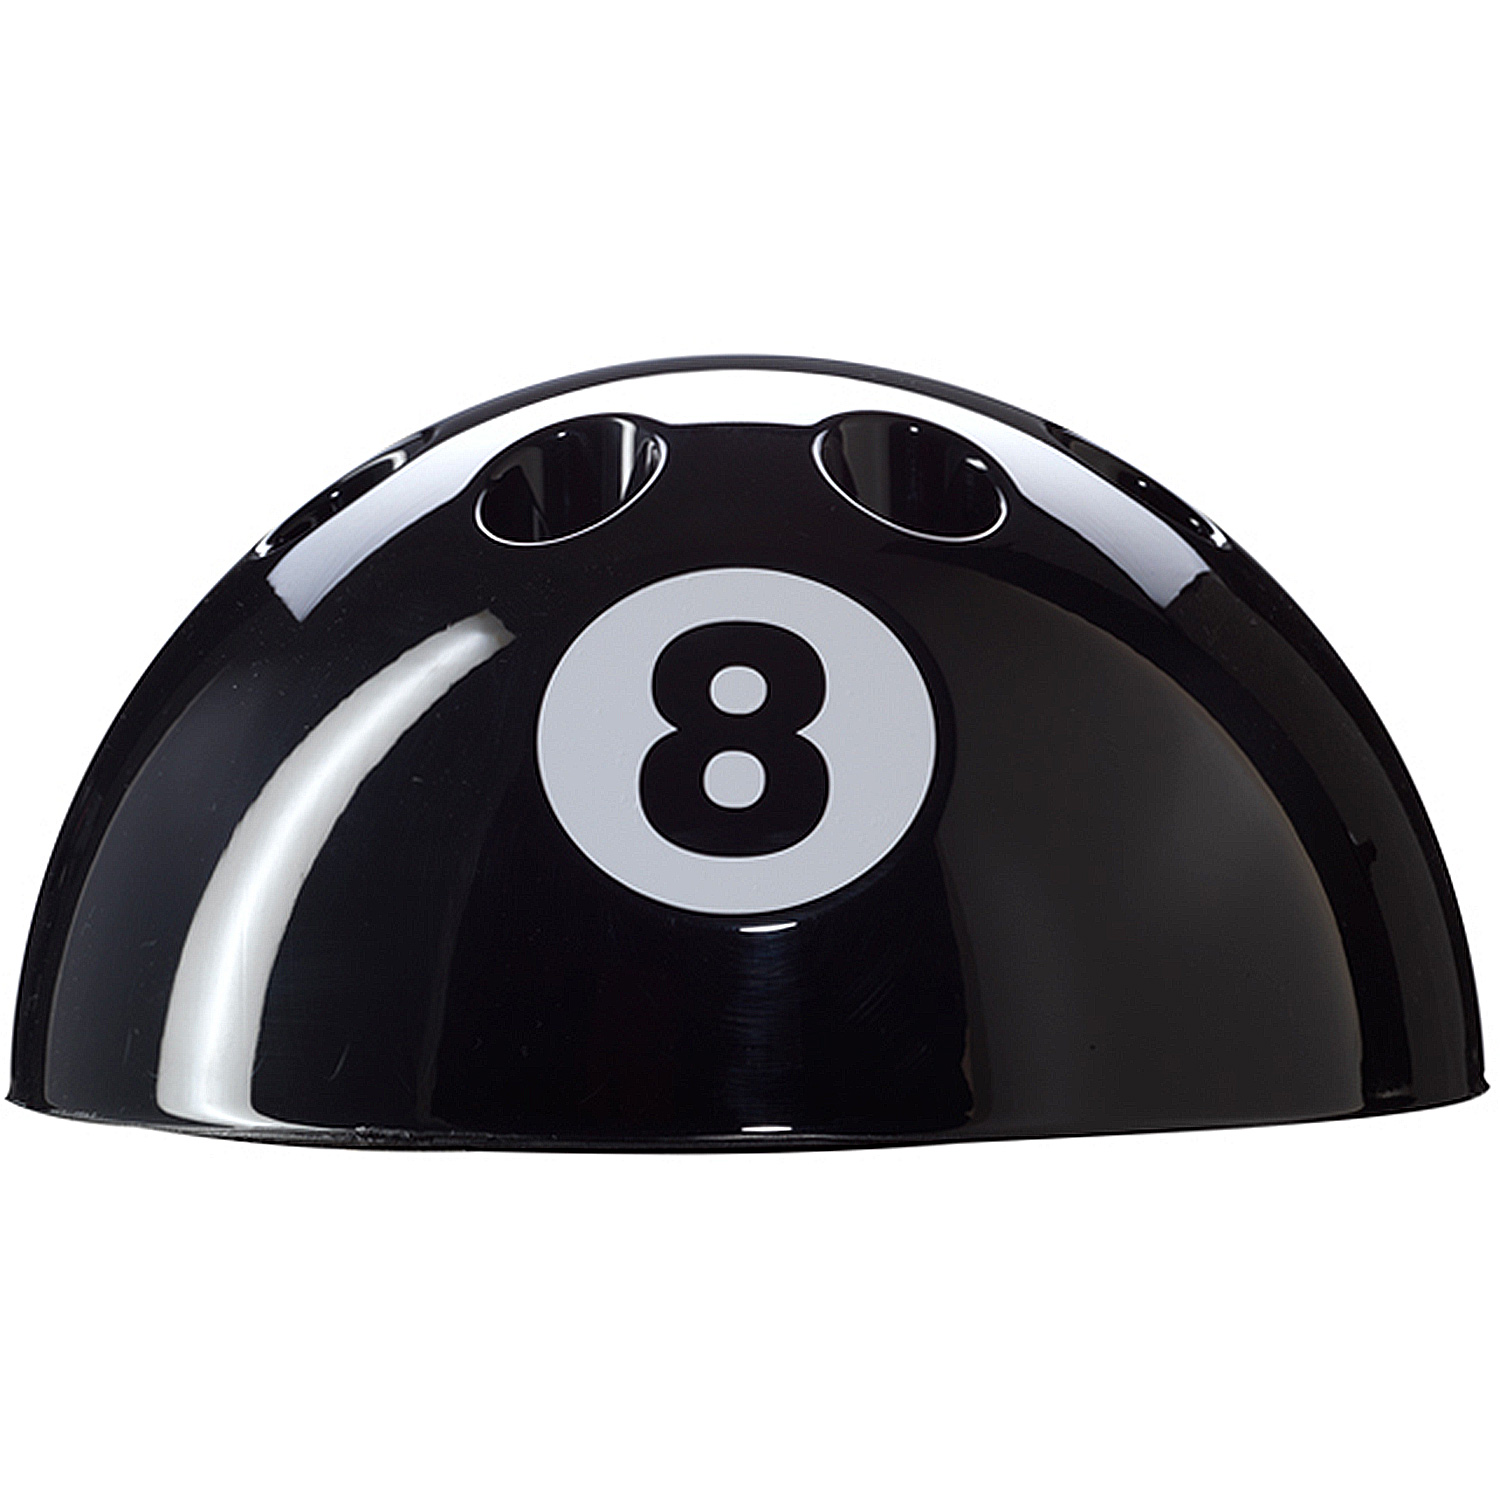 BA0799: Ceu stand 8-ball Black II